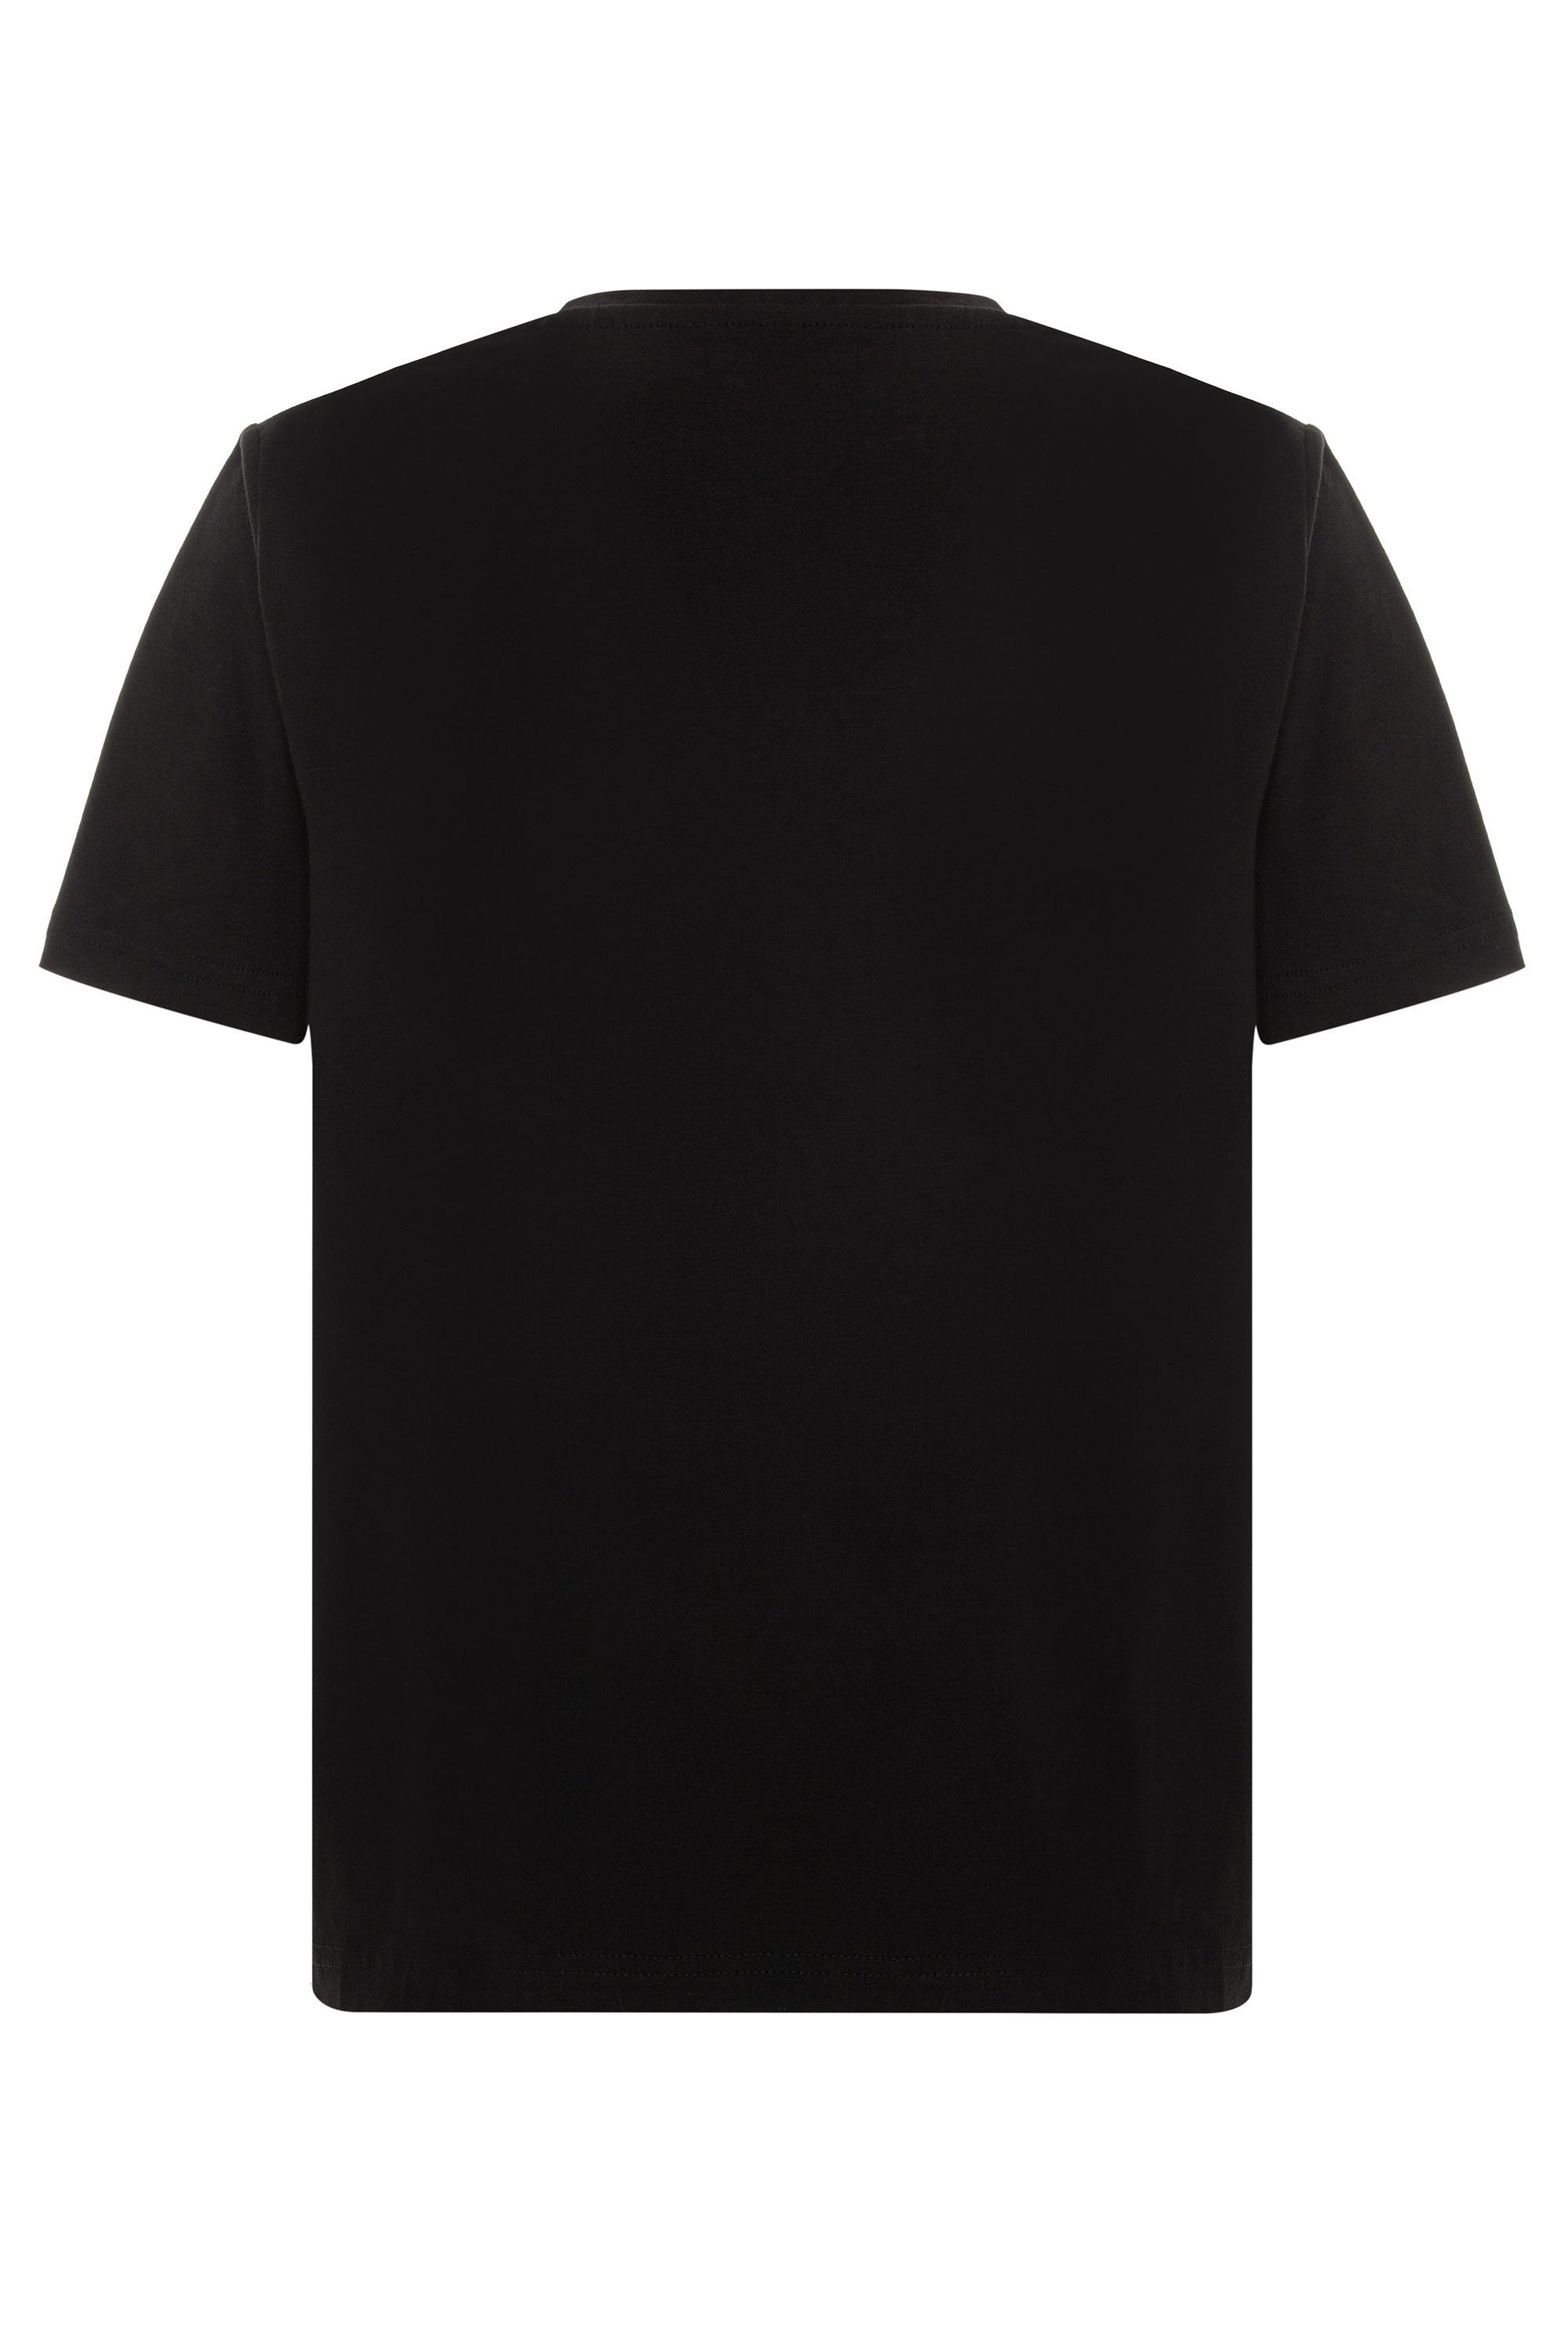 Baxx Cipo Print mit T-Shirt & coolem schwarz-weiß